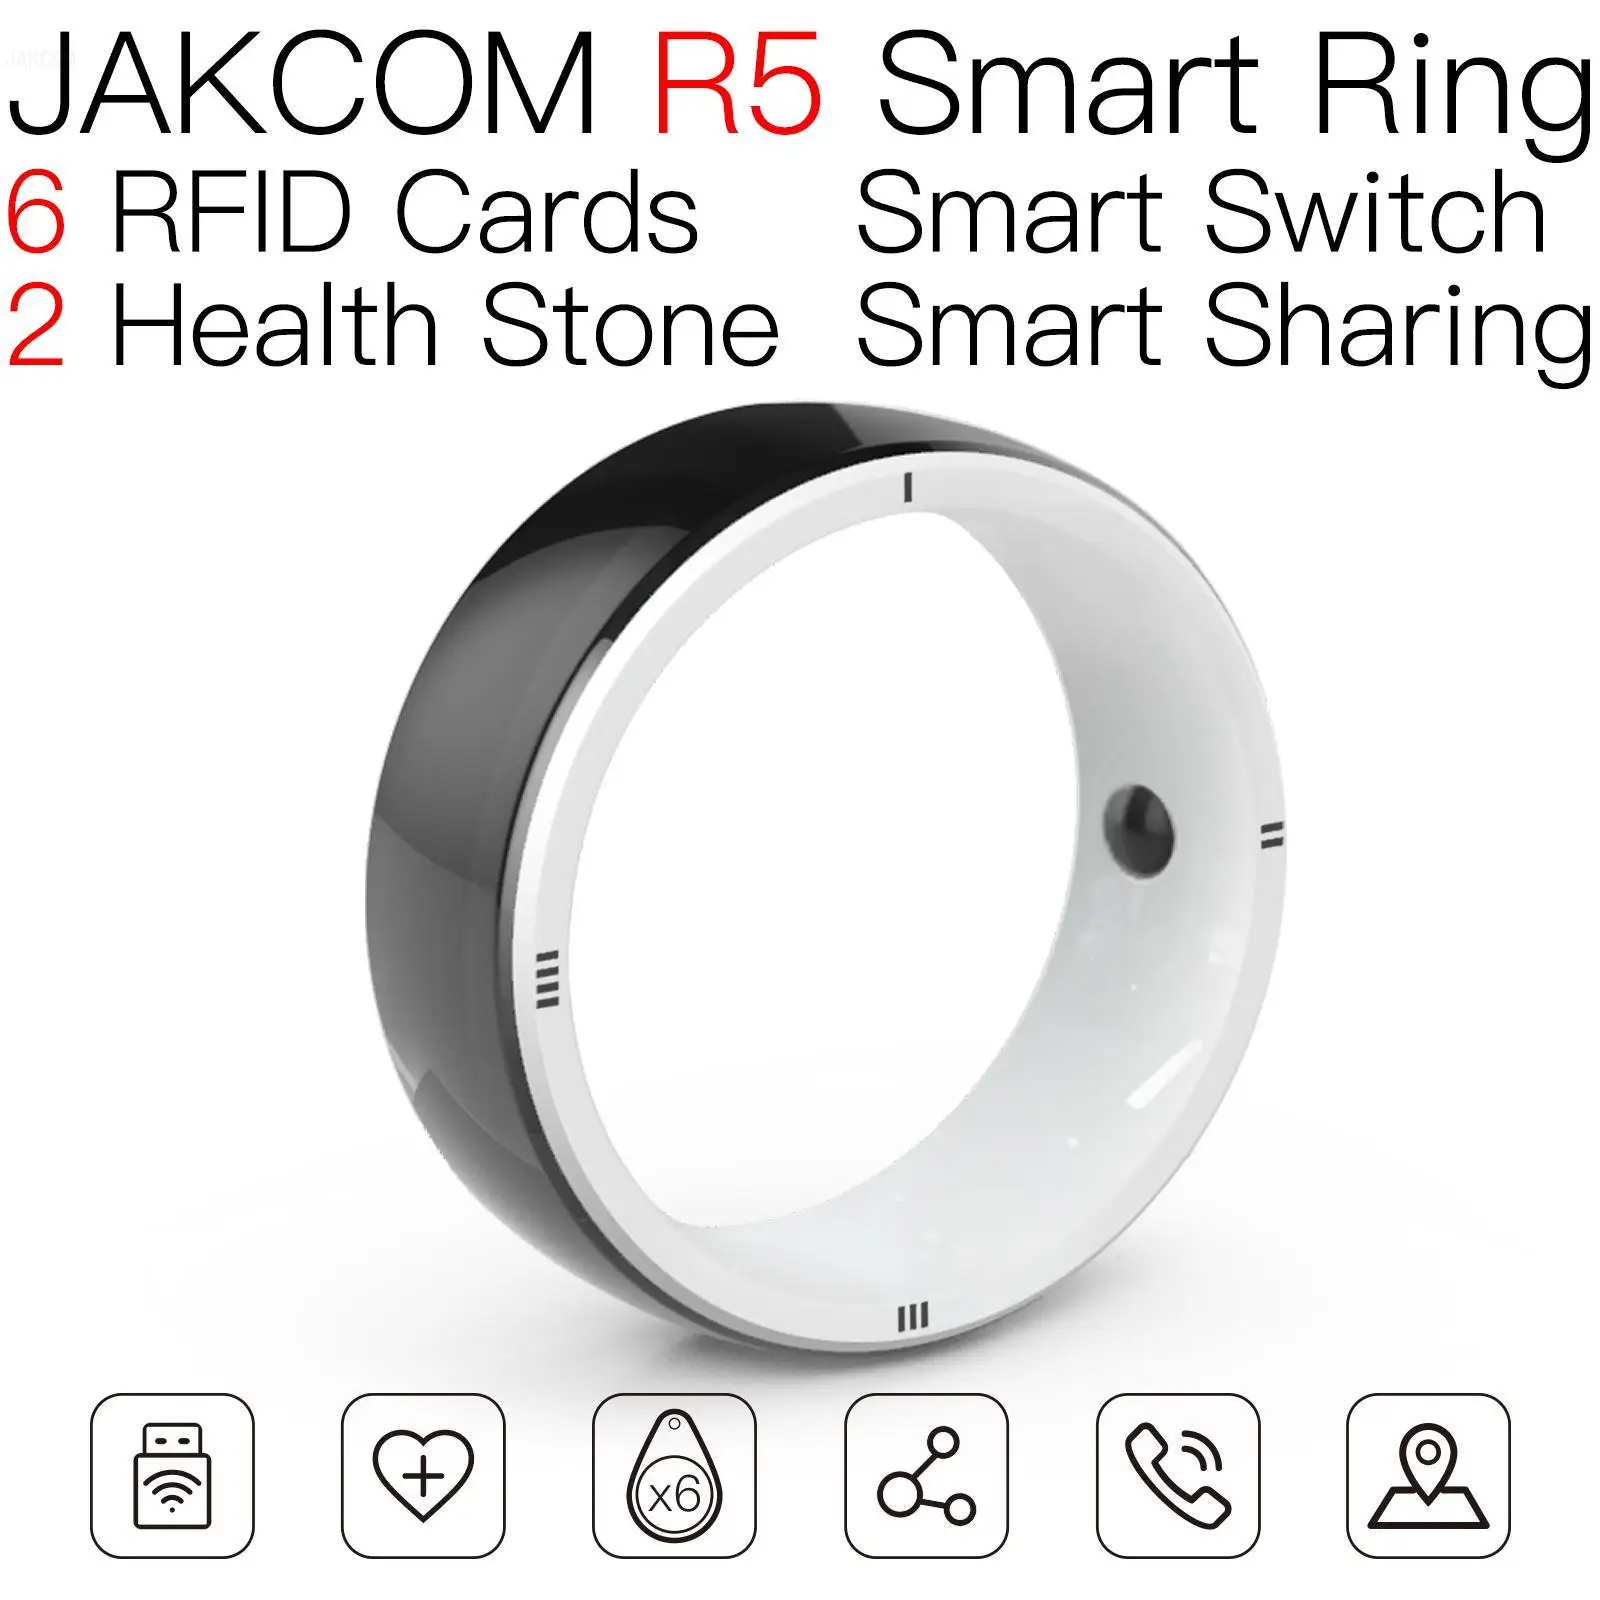 

JAKCOM R5 Smart Ring New arrival as 3 rupees items free shipping sri lanka uhf rfid labels 5000pcs ring 125khz tag nfc gadgets